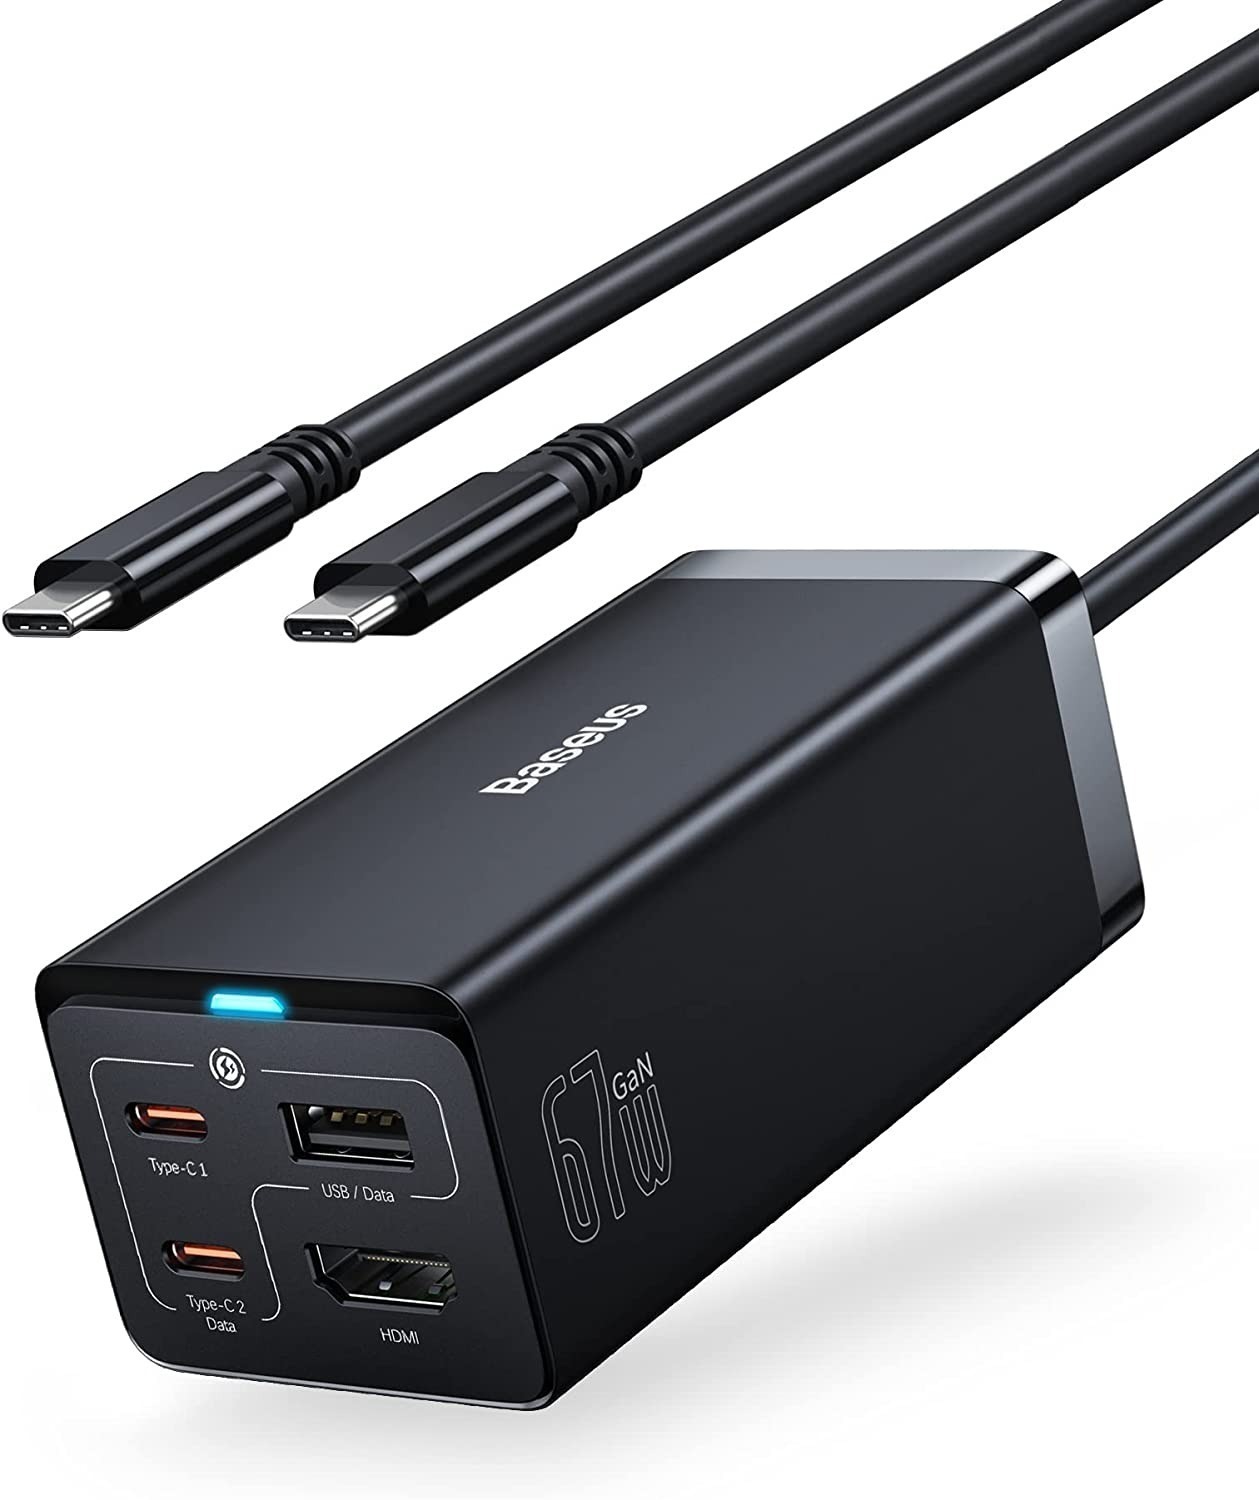 Baseus 67W GaN5 USB-C Charging Station w/ 3 USB Ports & 1 HDMI Port for Steam Deck $43.19 + Free Shipping w/ Prime or Orders $25+